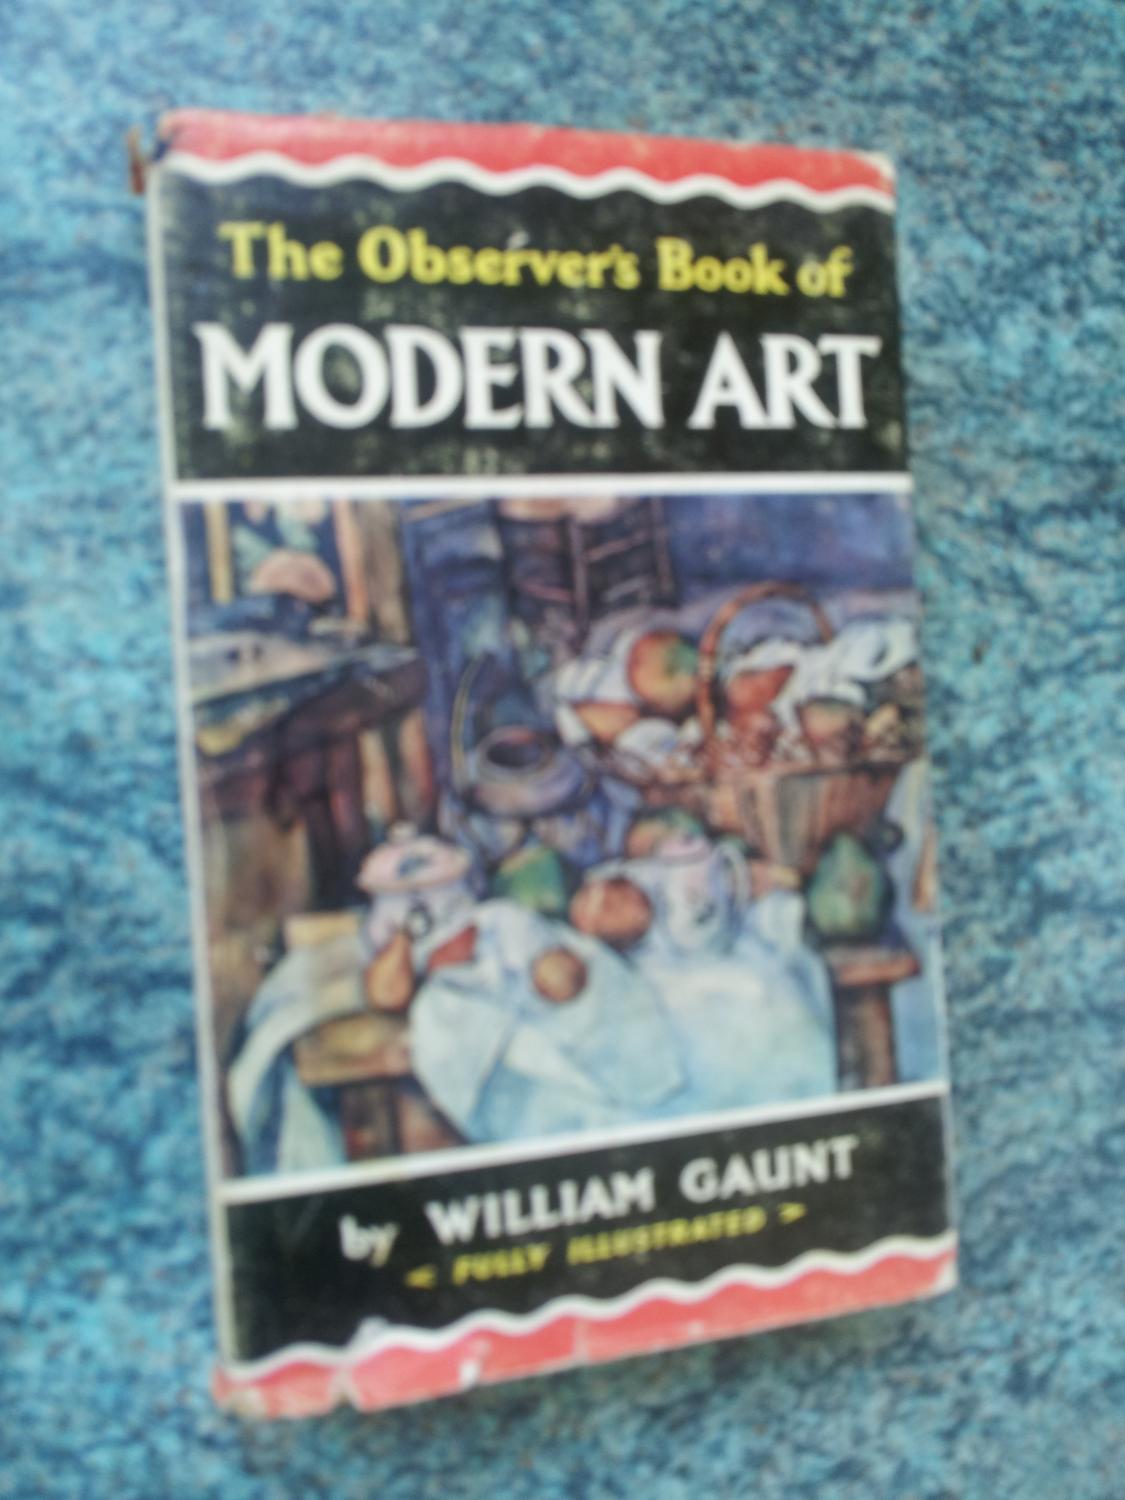 THE OBSERVER'S BOOK OF MODERN ART - WILLIAM GAUNT